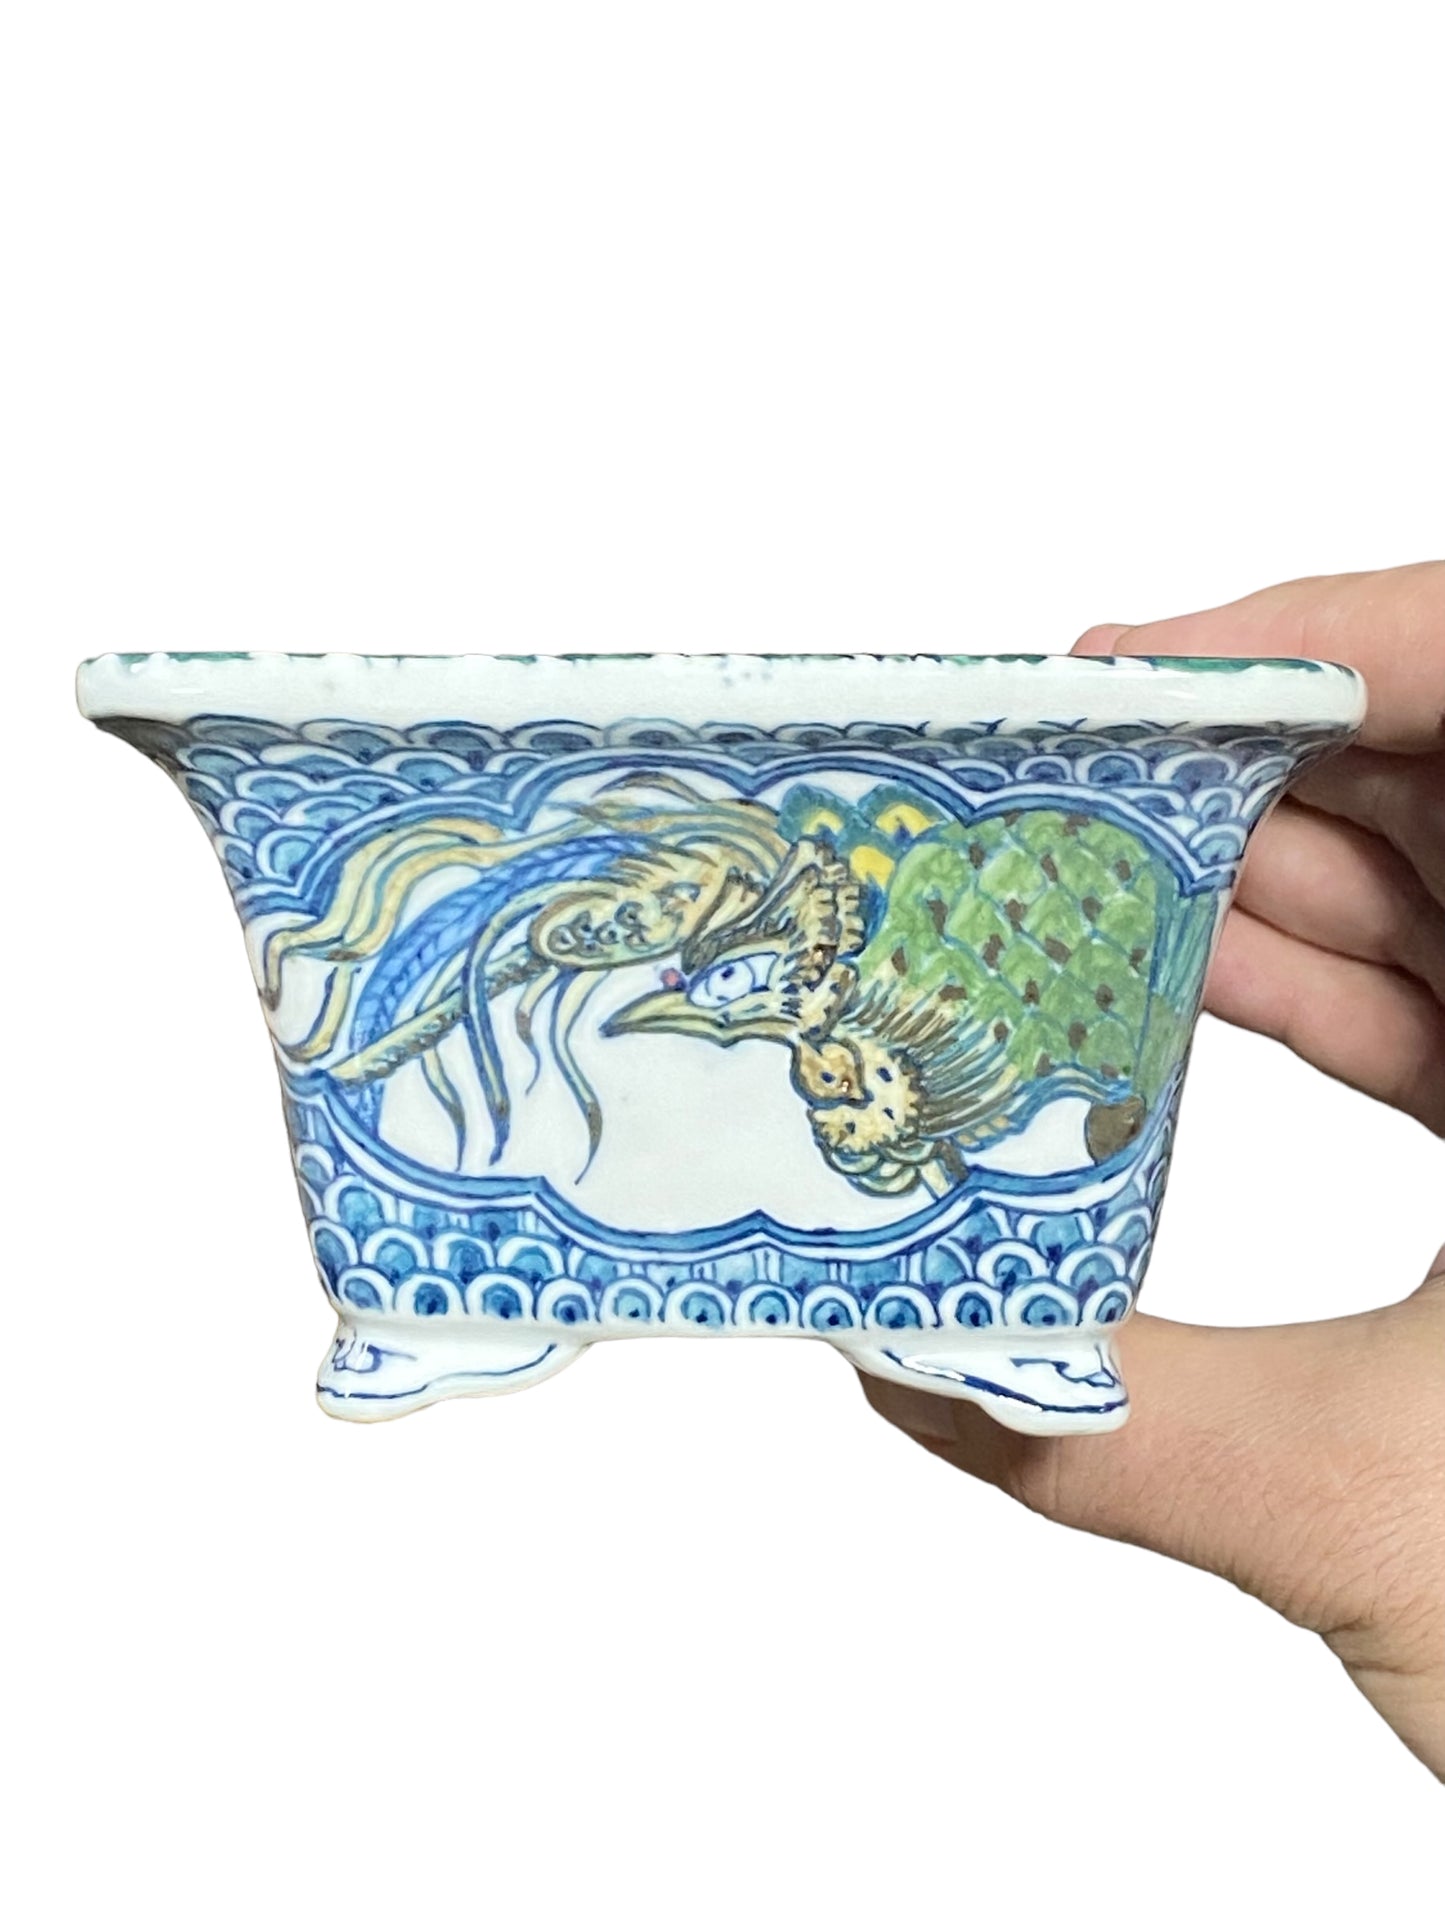 Shoseki and Shibakatsu Collab - Painted Bonsai Pot